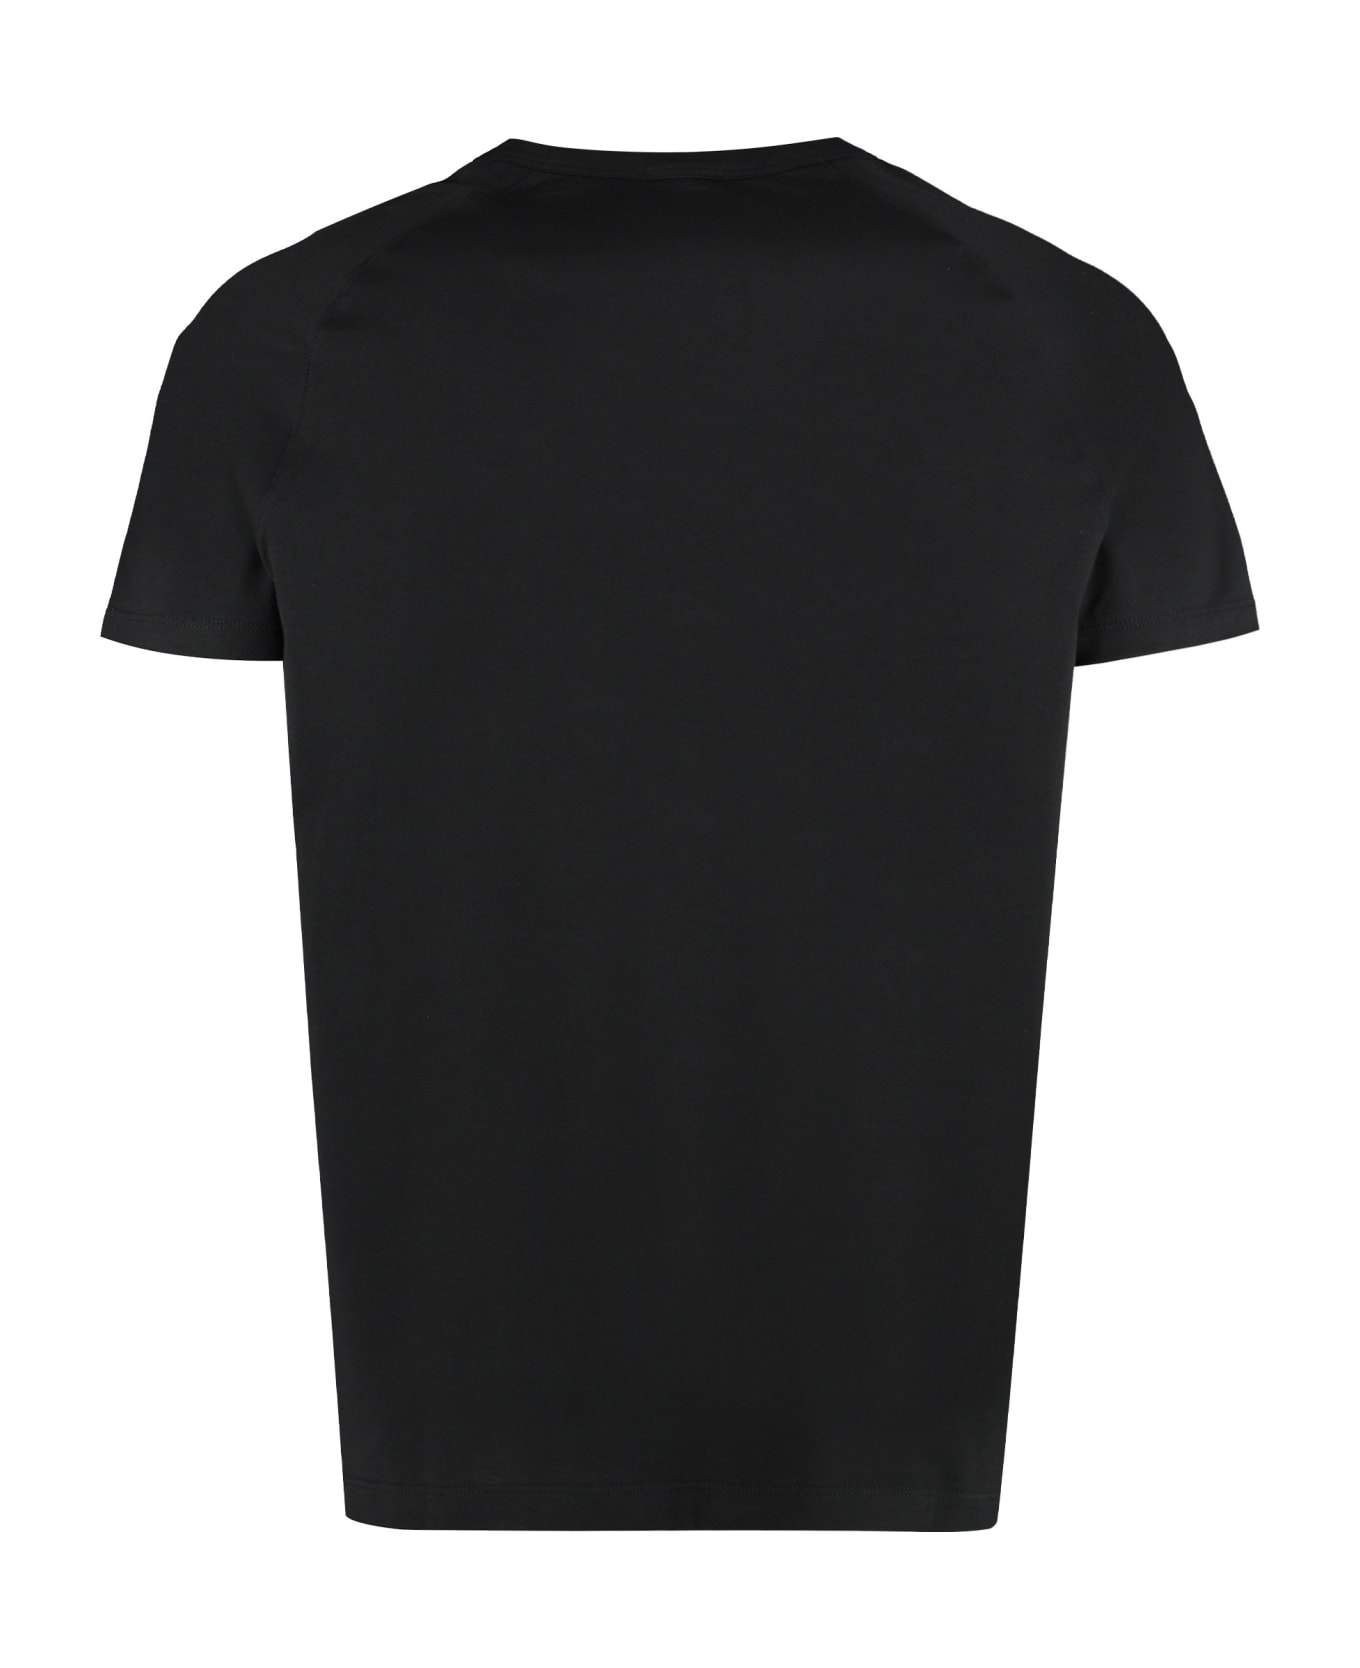 Paul&Shark Printed Cotton T-shirt - black